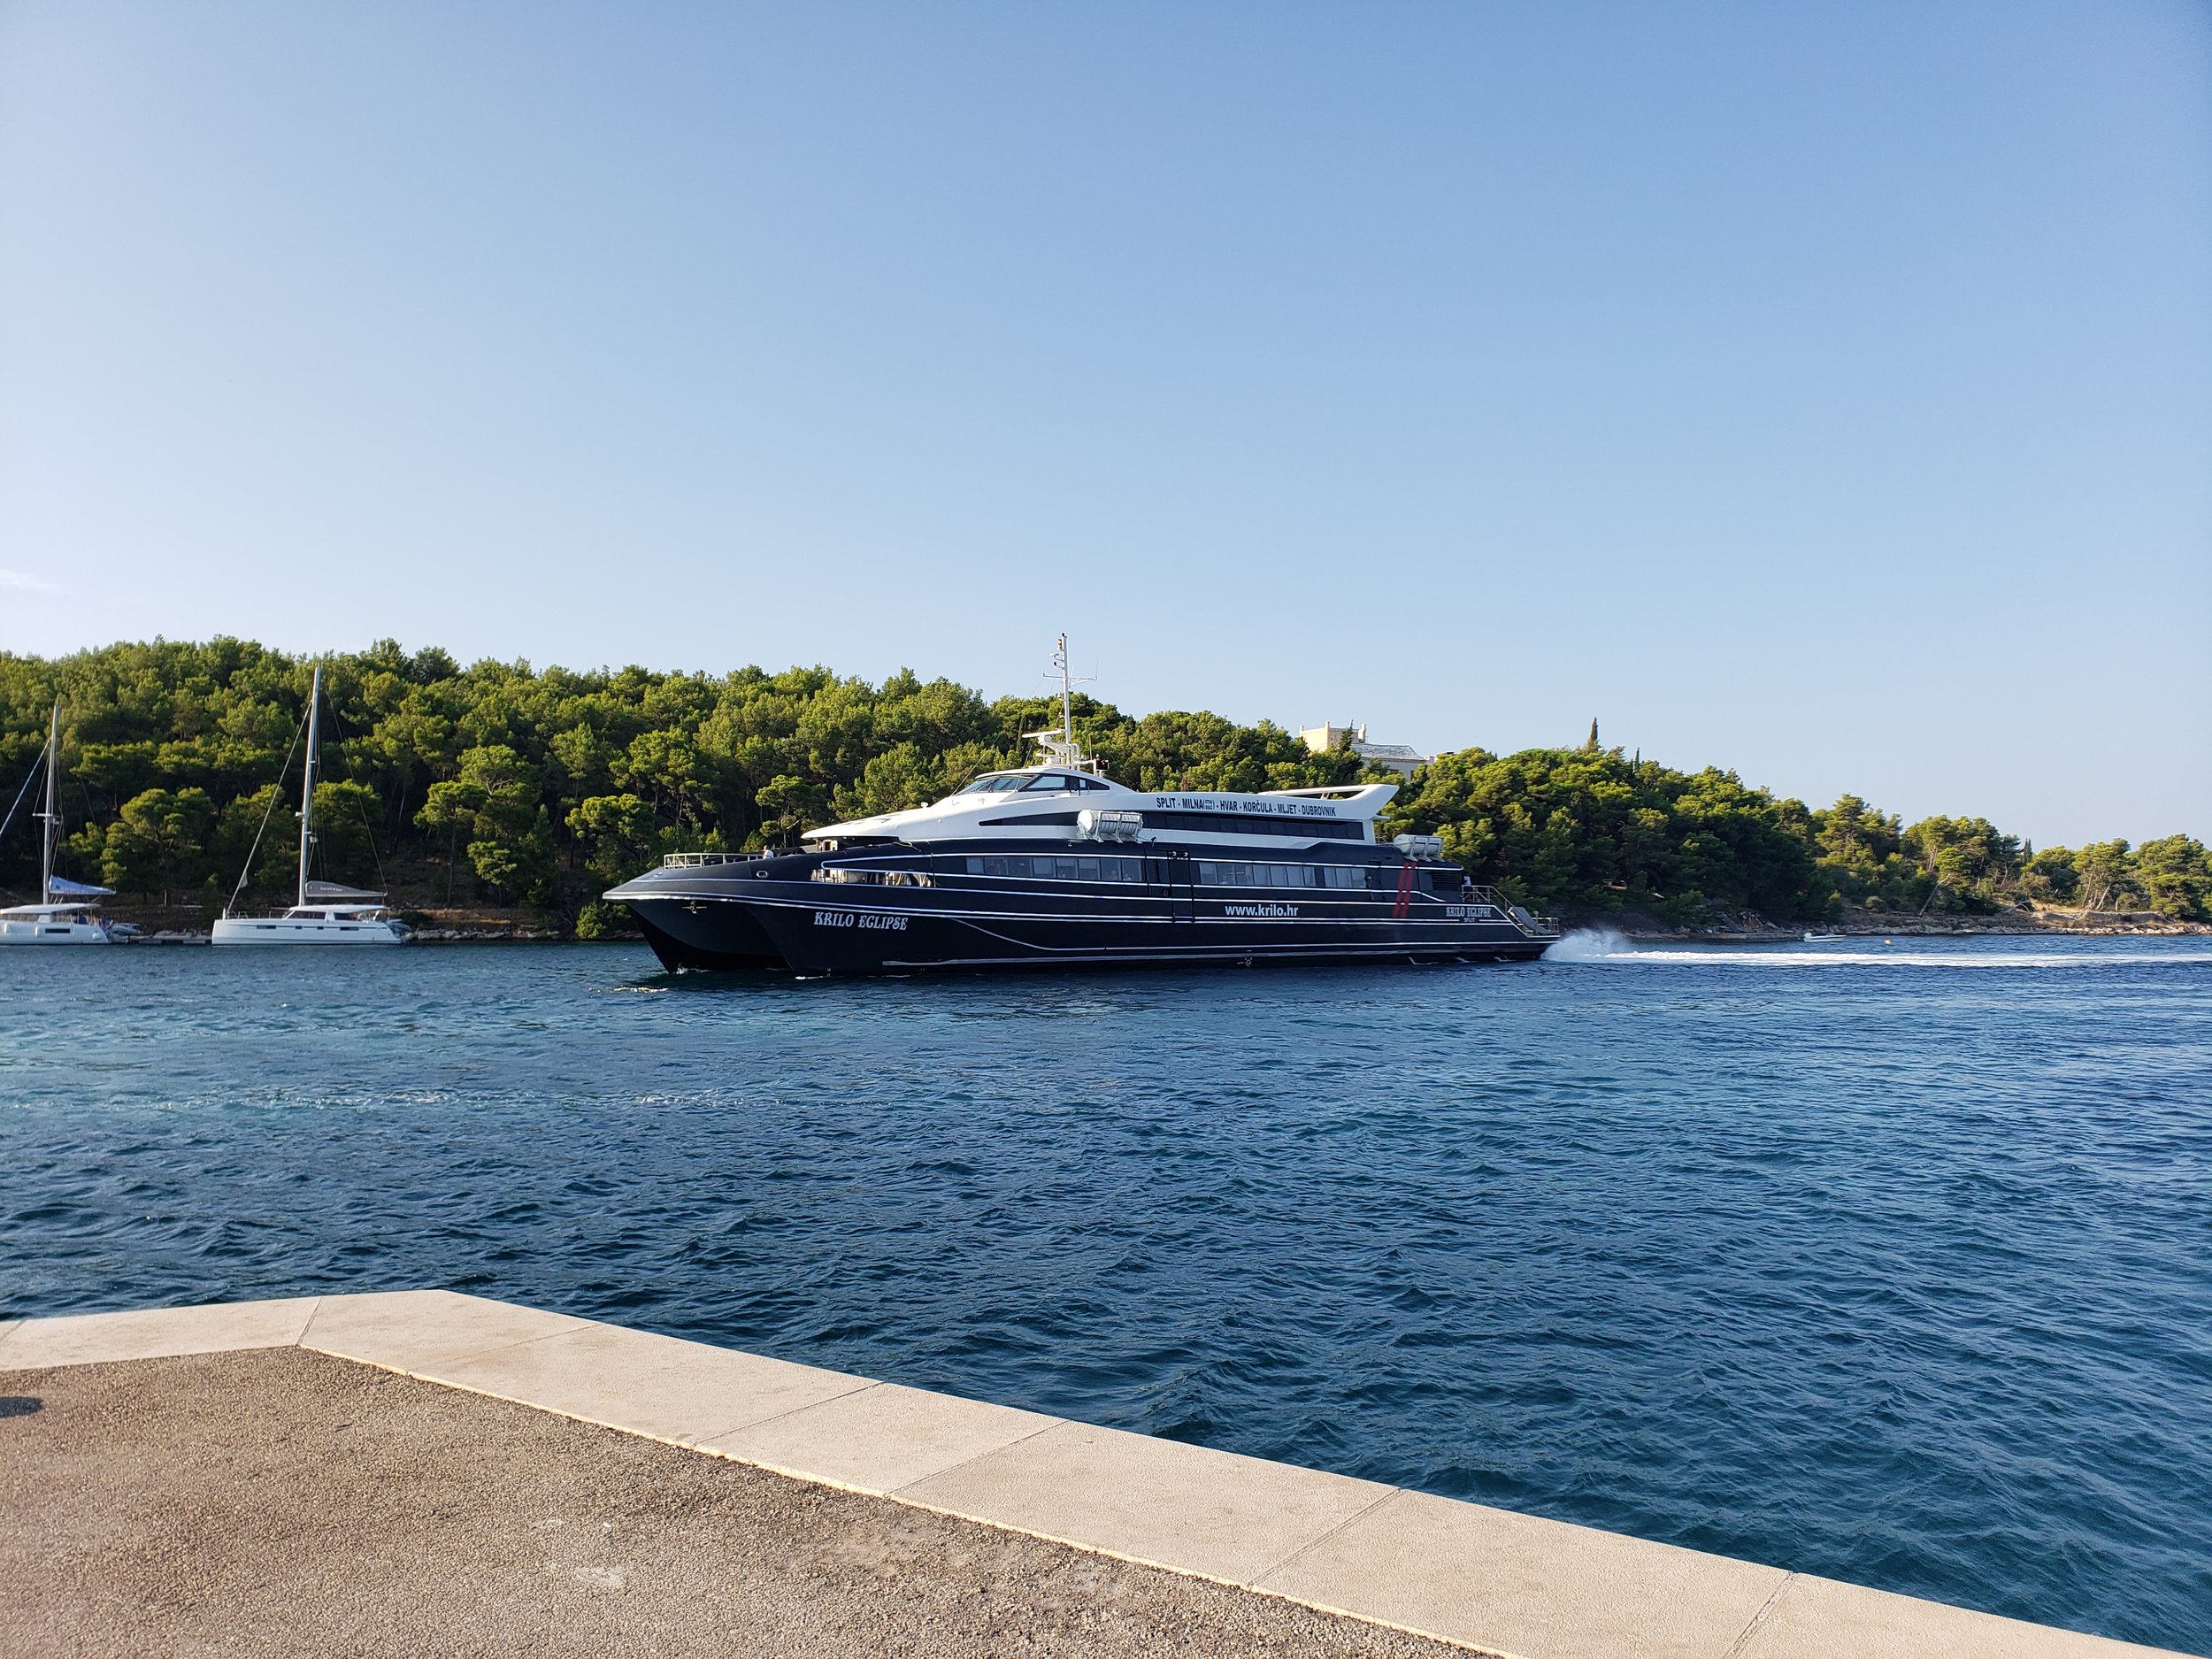  Krilo catamaran ferry from Milna to Dubrovnik 